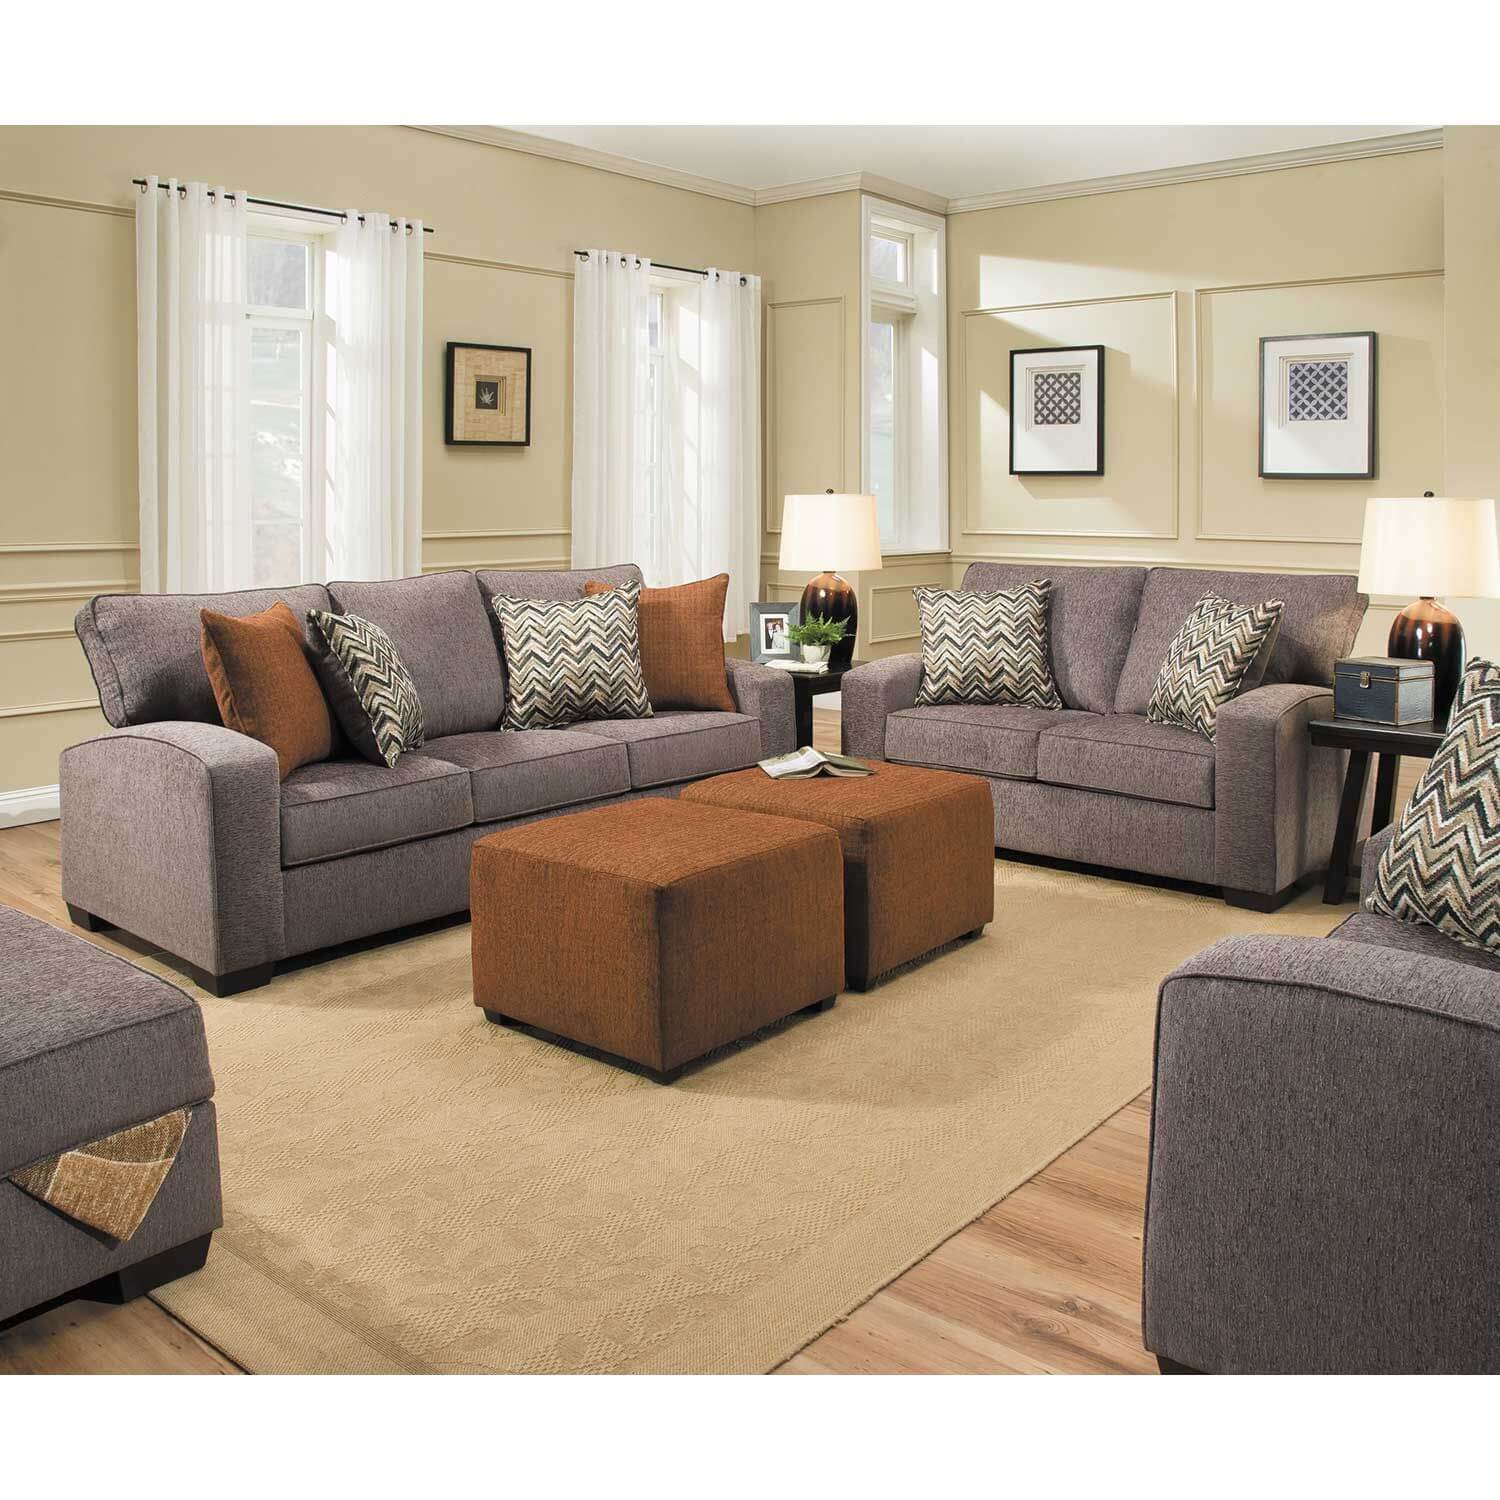 Endurance Shadow Sofa And Loveseat Set, Fabric Living Room Sets